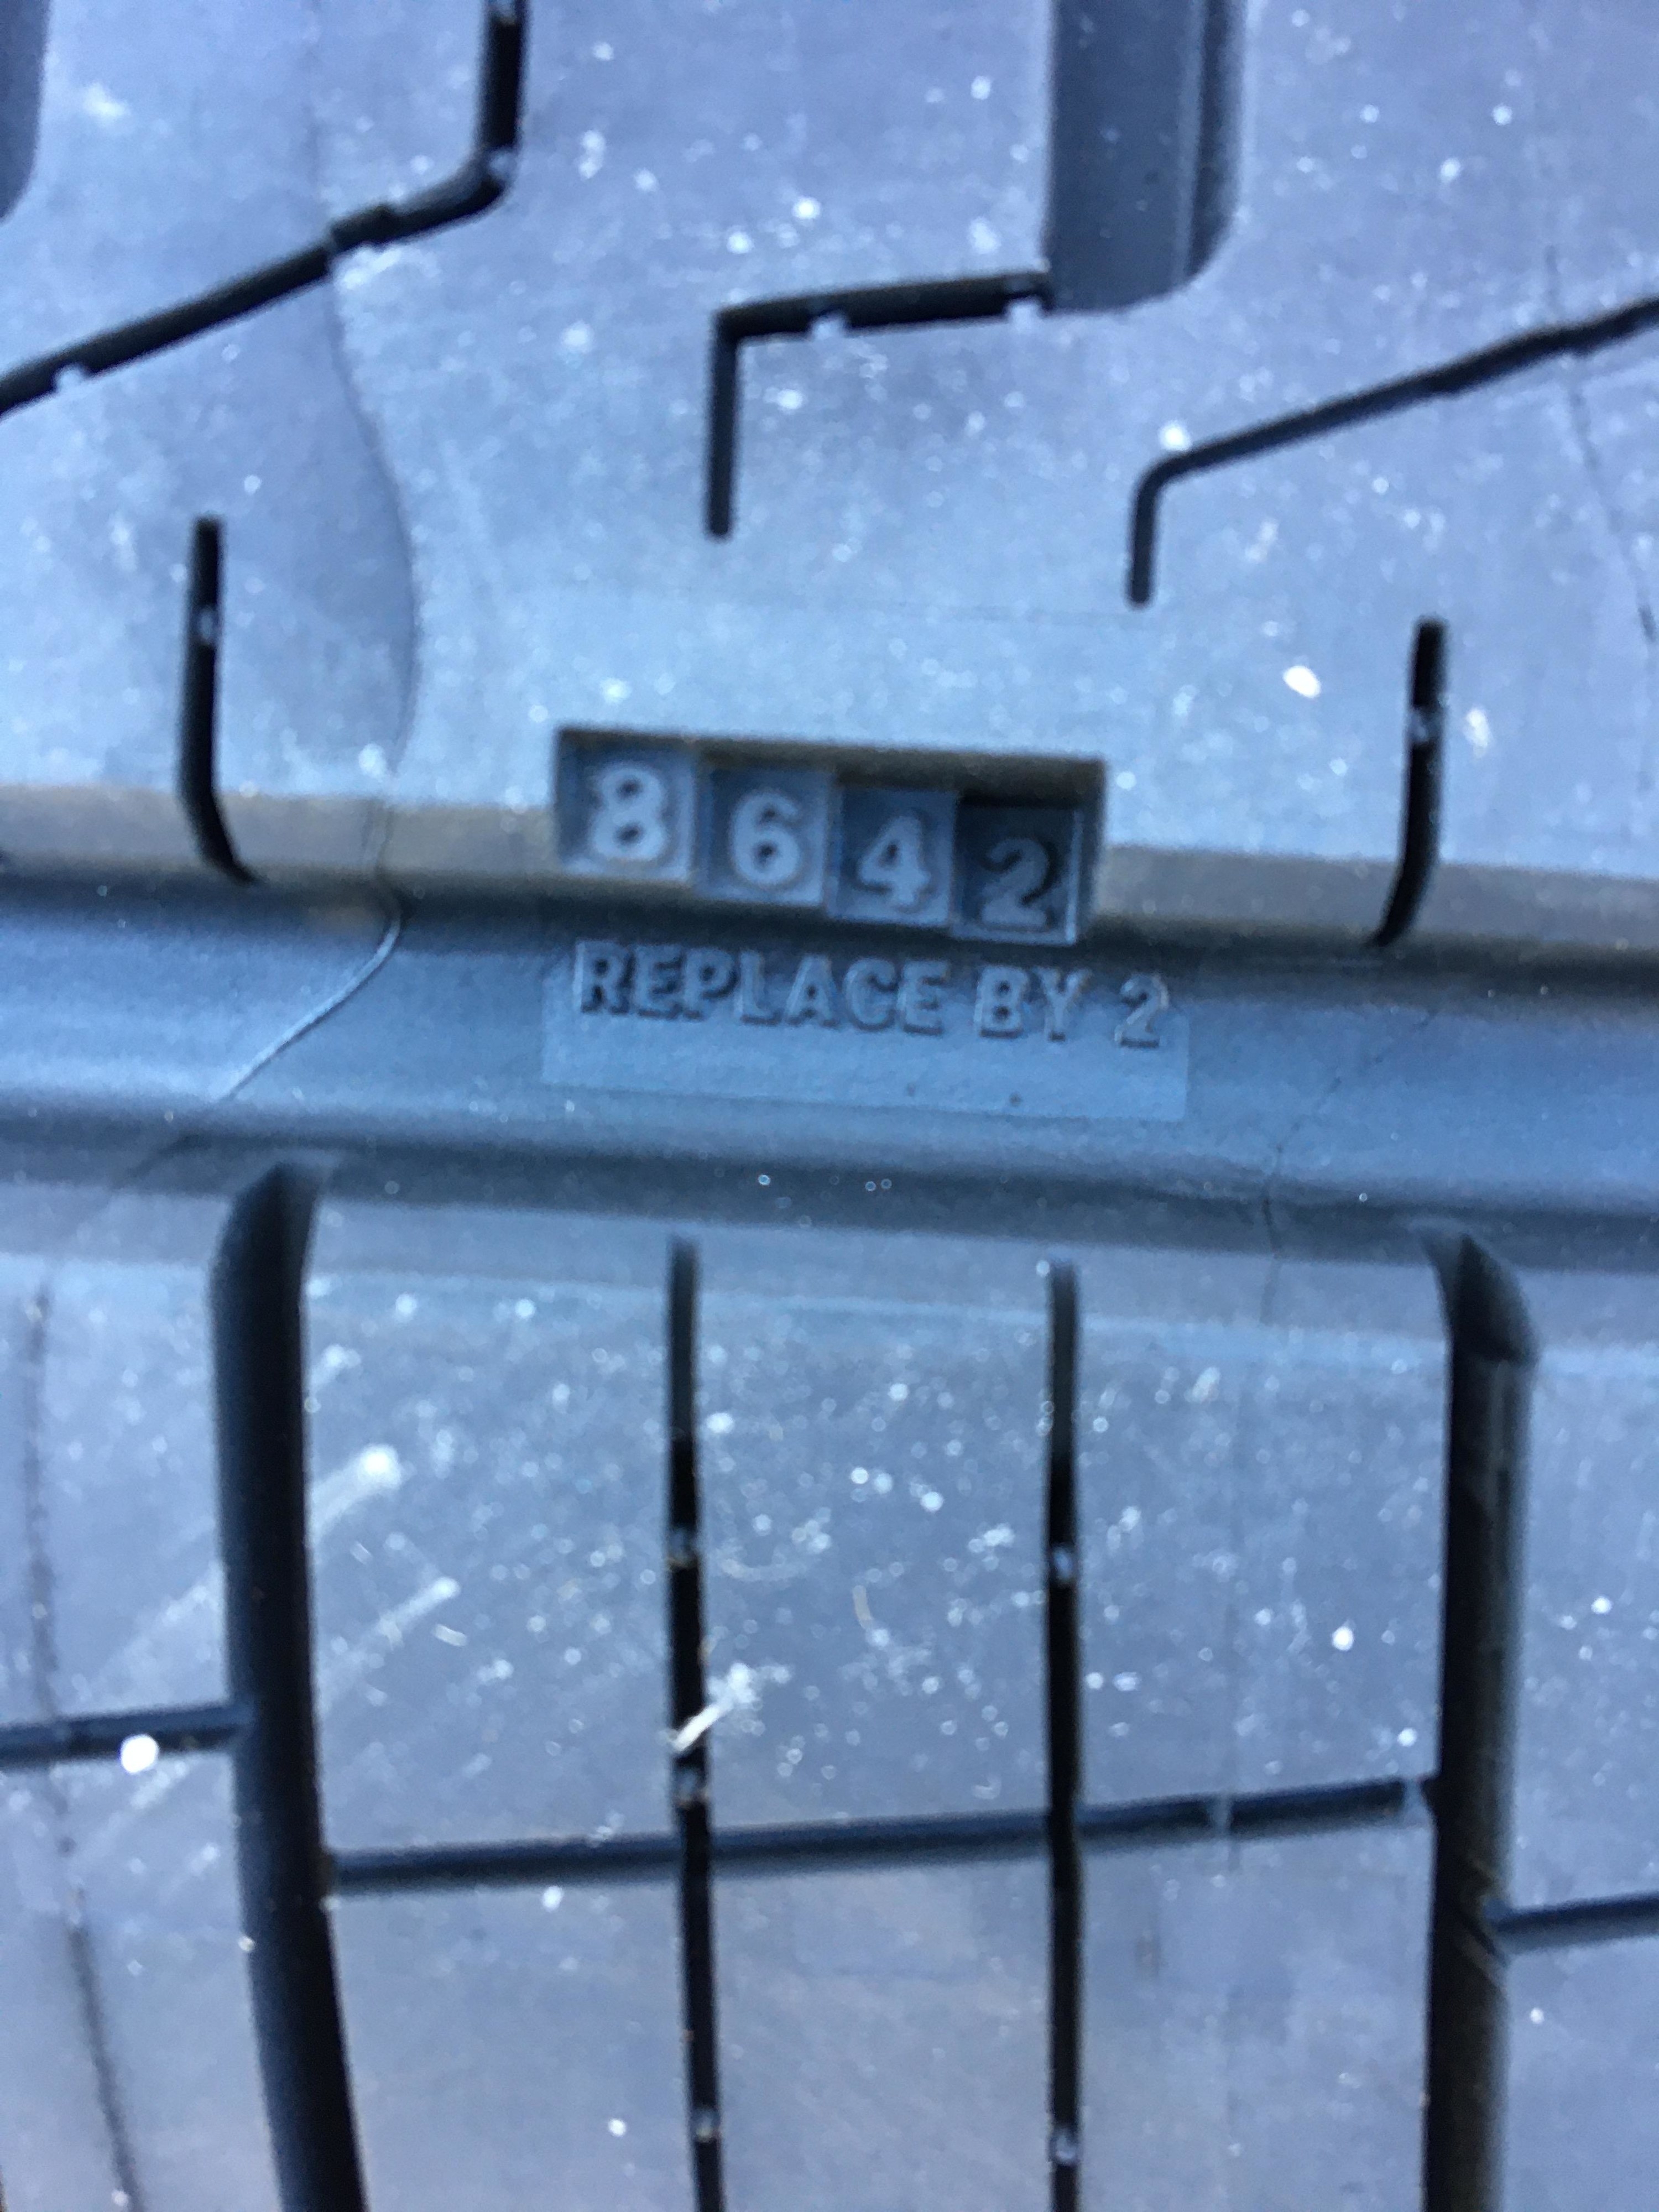 A tread measure on a tire